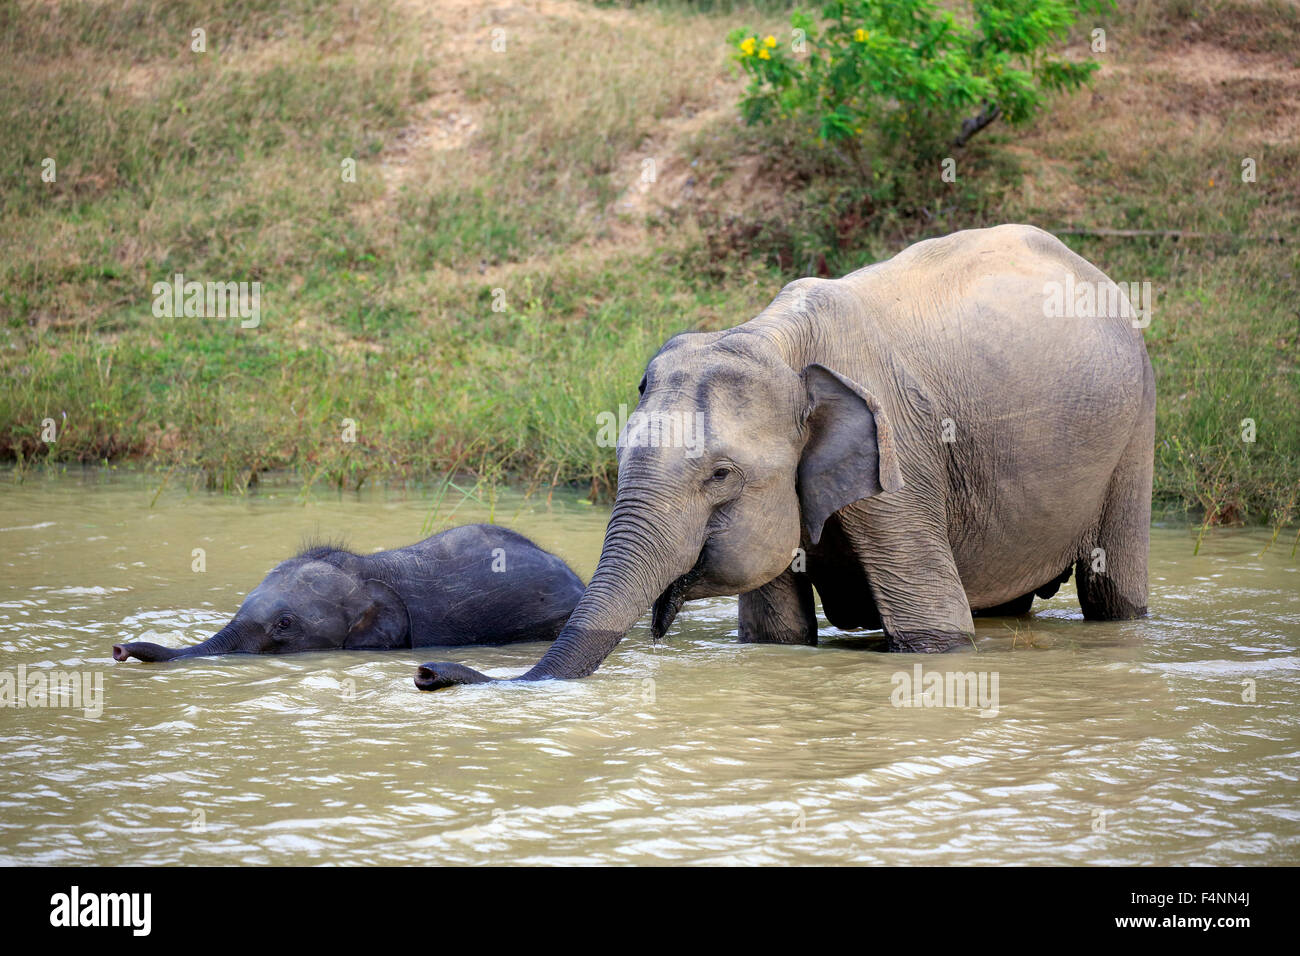 Sri Lankan elephant (Elephas maximus maximus), mother with calf in water, drinking, Yala National Park, Sri Lanka Stock Photo